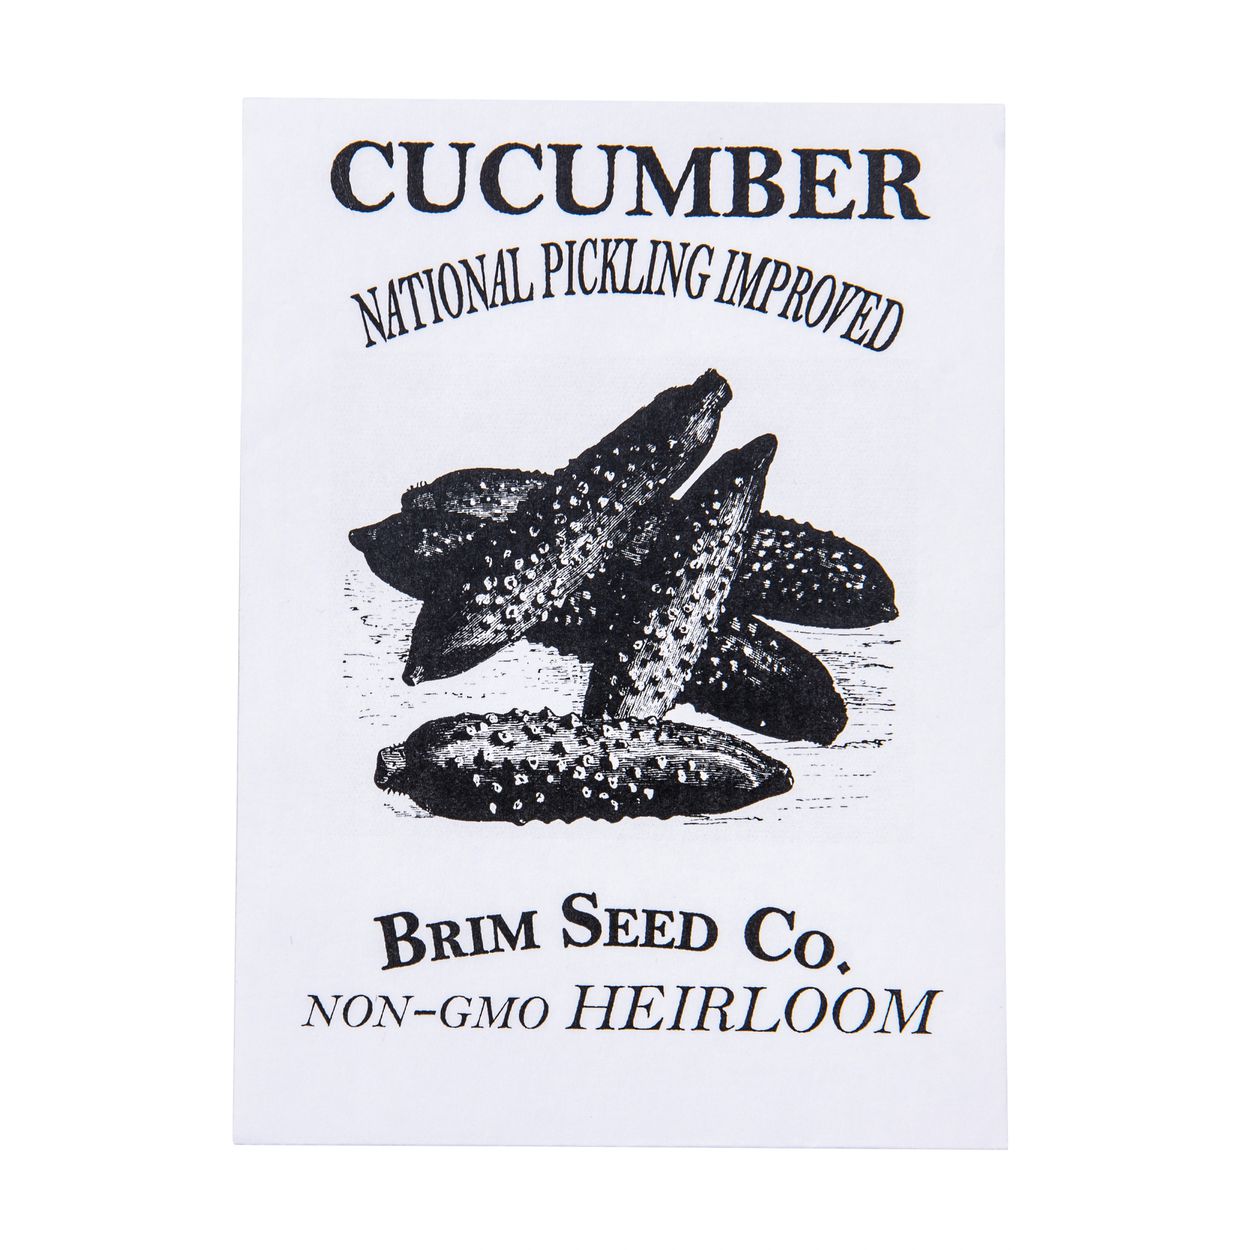 Brim Seed Co. - National Pickling Improved Cucumber Heirloom Seed